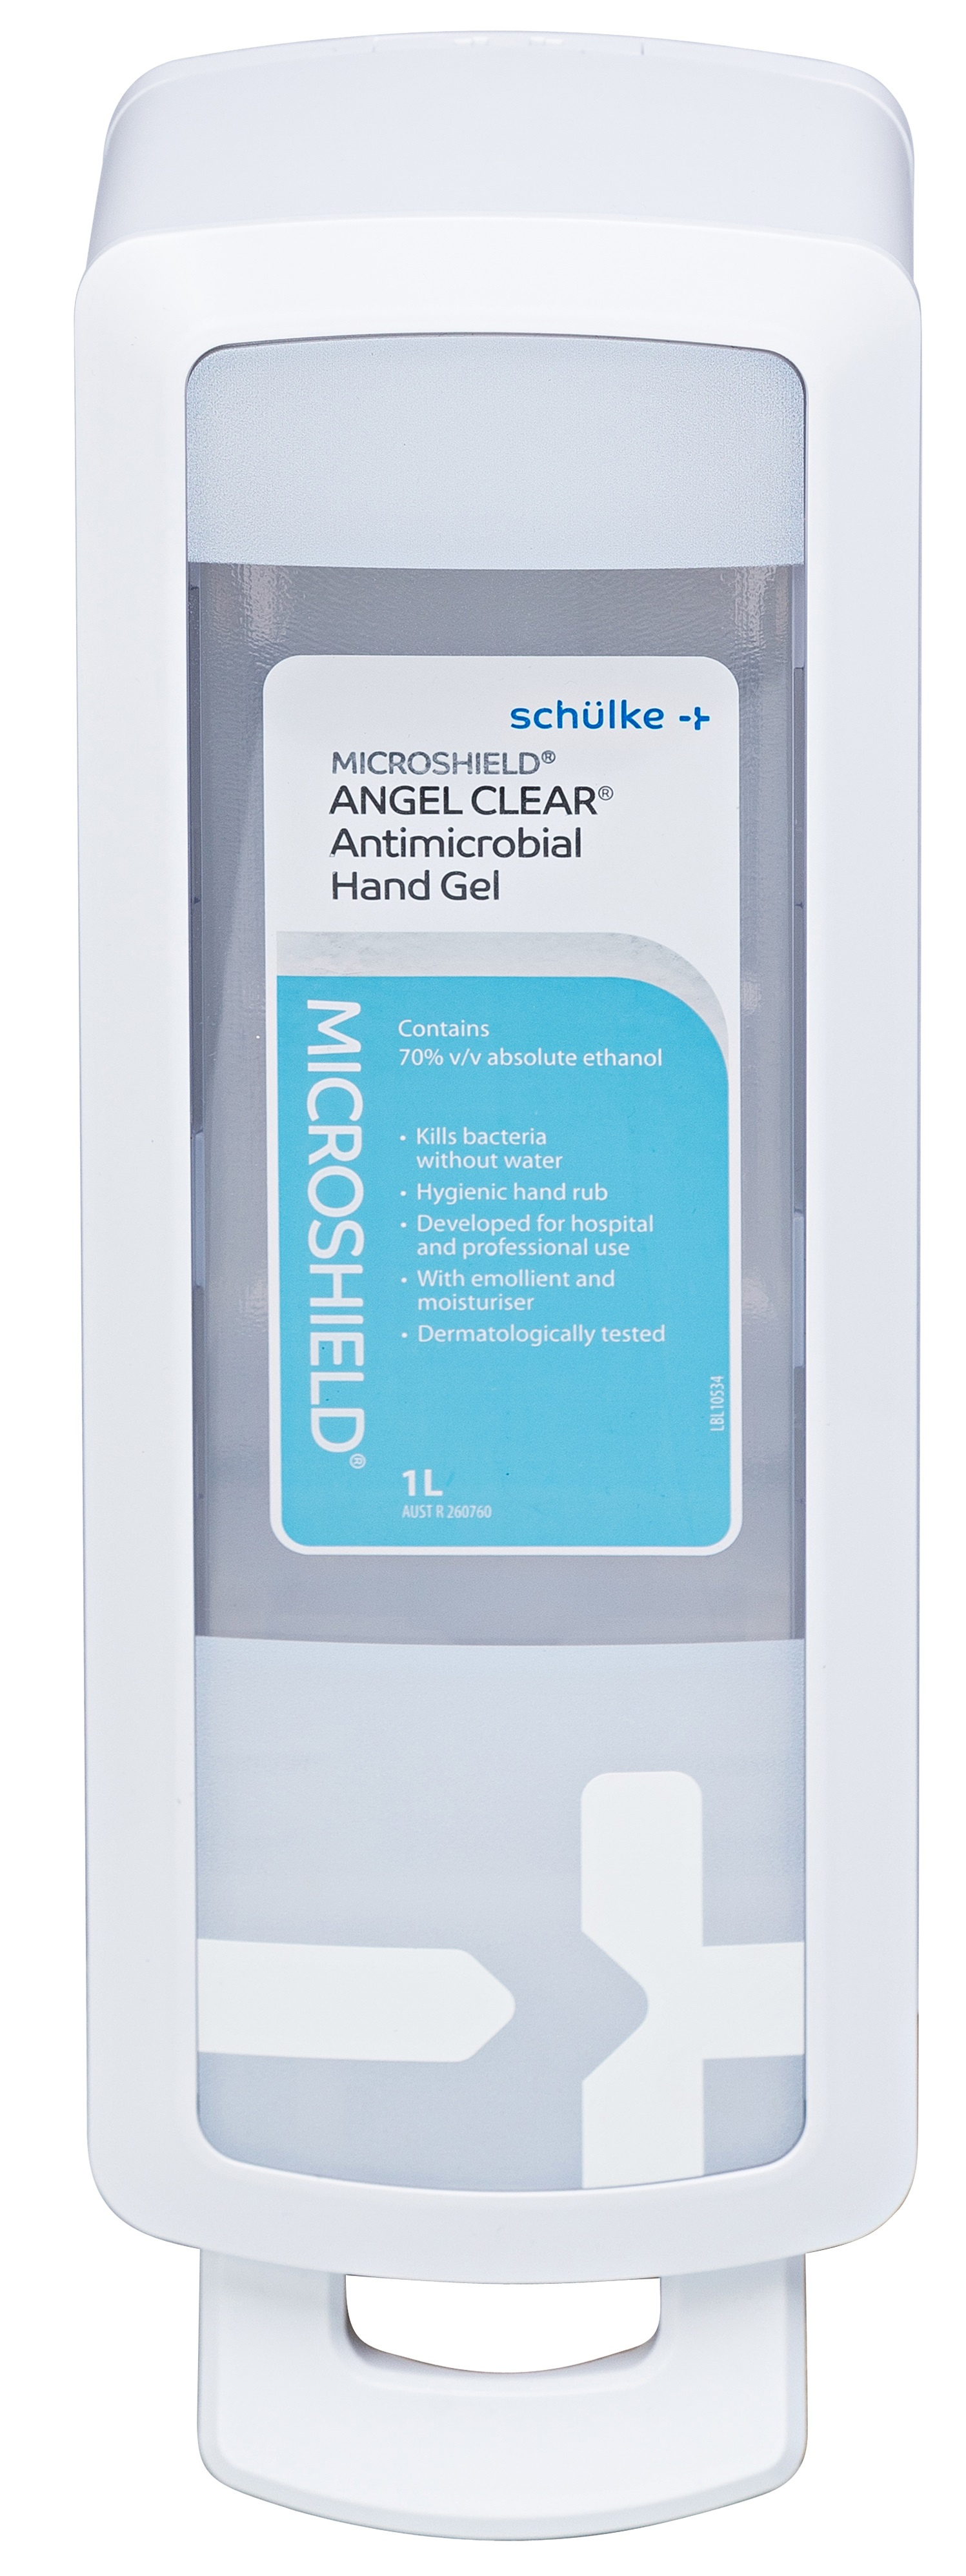 Microshield Angel Clear Antimicrobial Hand Gel 1000ml image 1